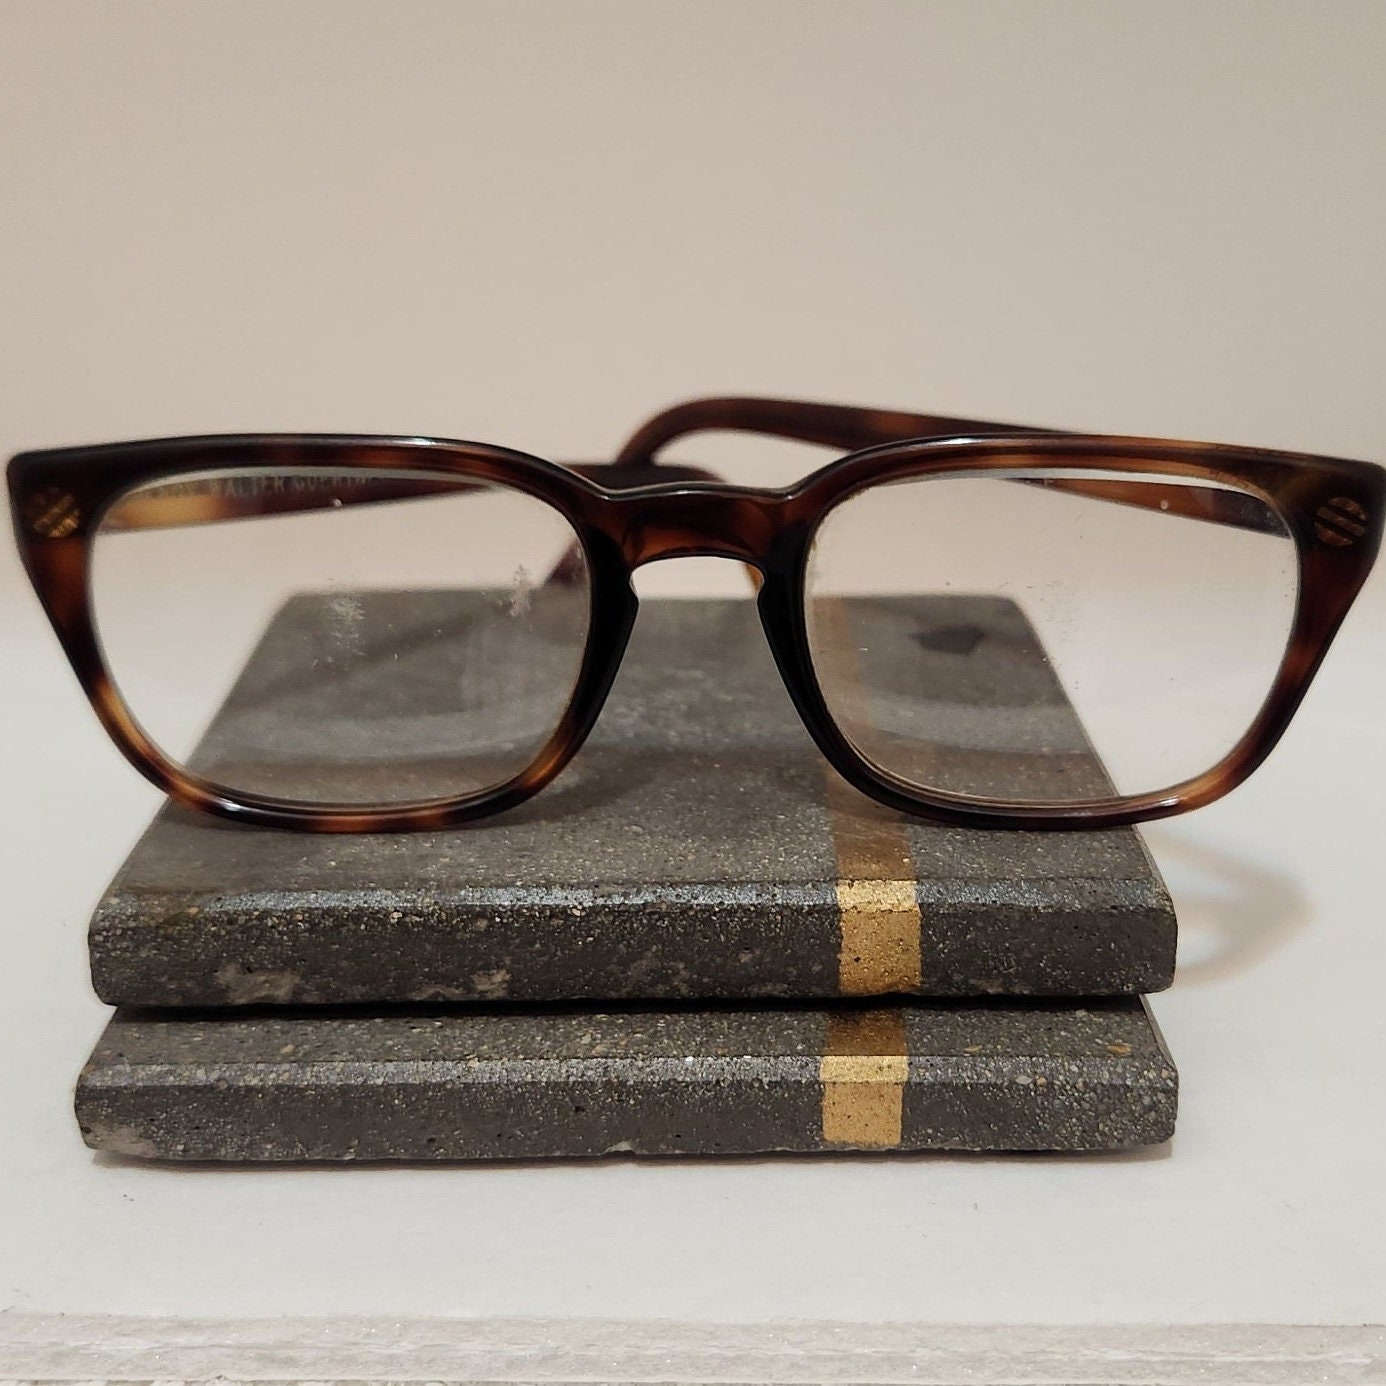 Mahogany Case for Glasses and Sunglasses — T. Weatherhead & Co.